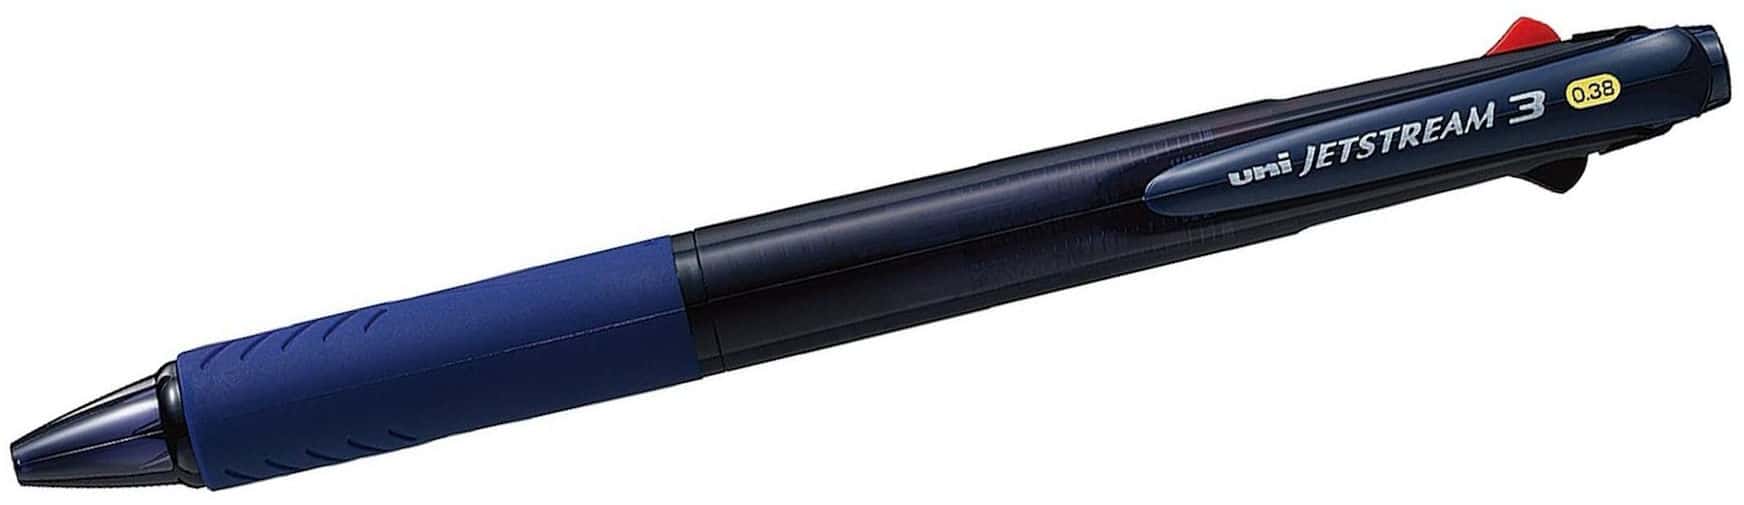 Reusachtig Vervloekt kamp Uni Jetstream 3 Color Multi-pen | Unsharpen